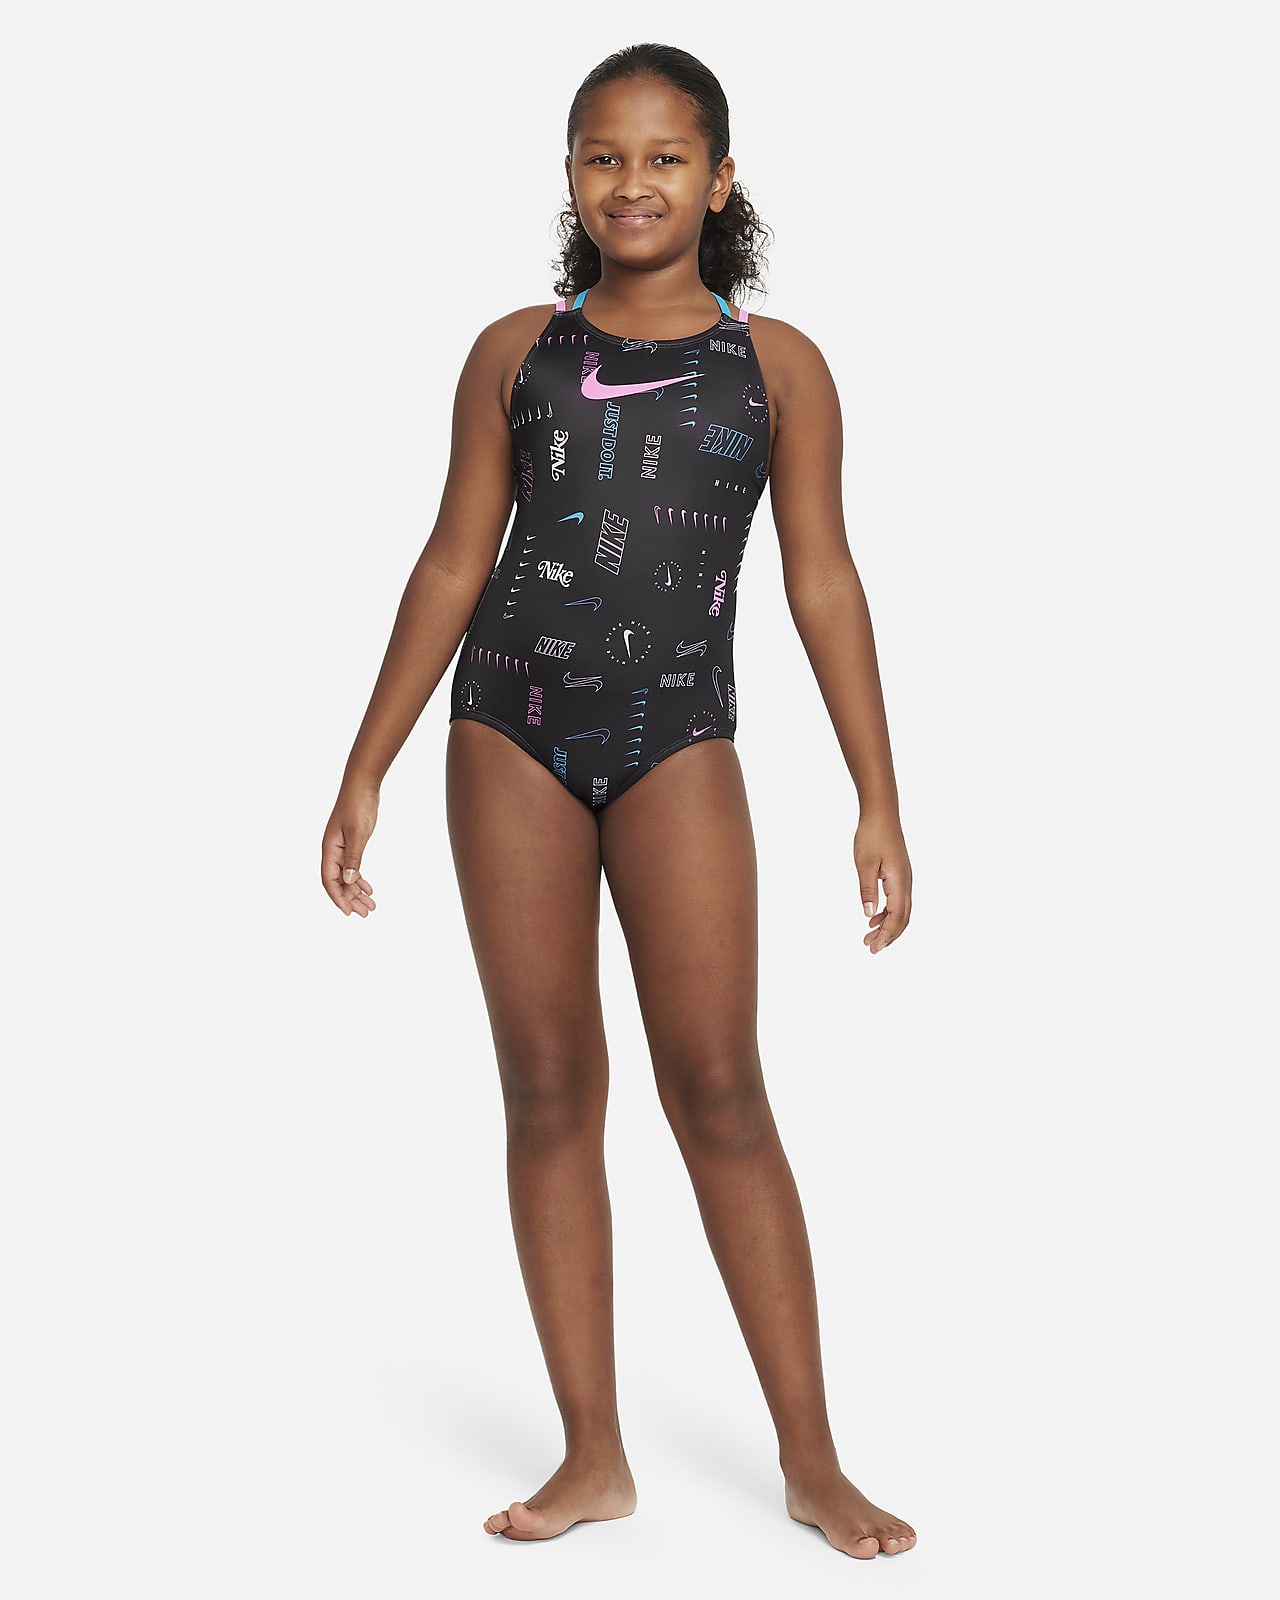 Kids Sporty One Piece Swimsuit Children Teens Girls Practice Athletic  Swimwear